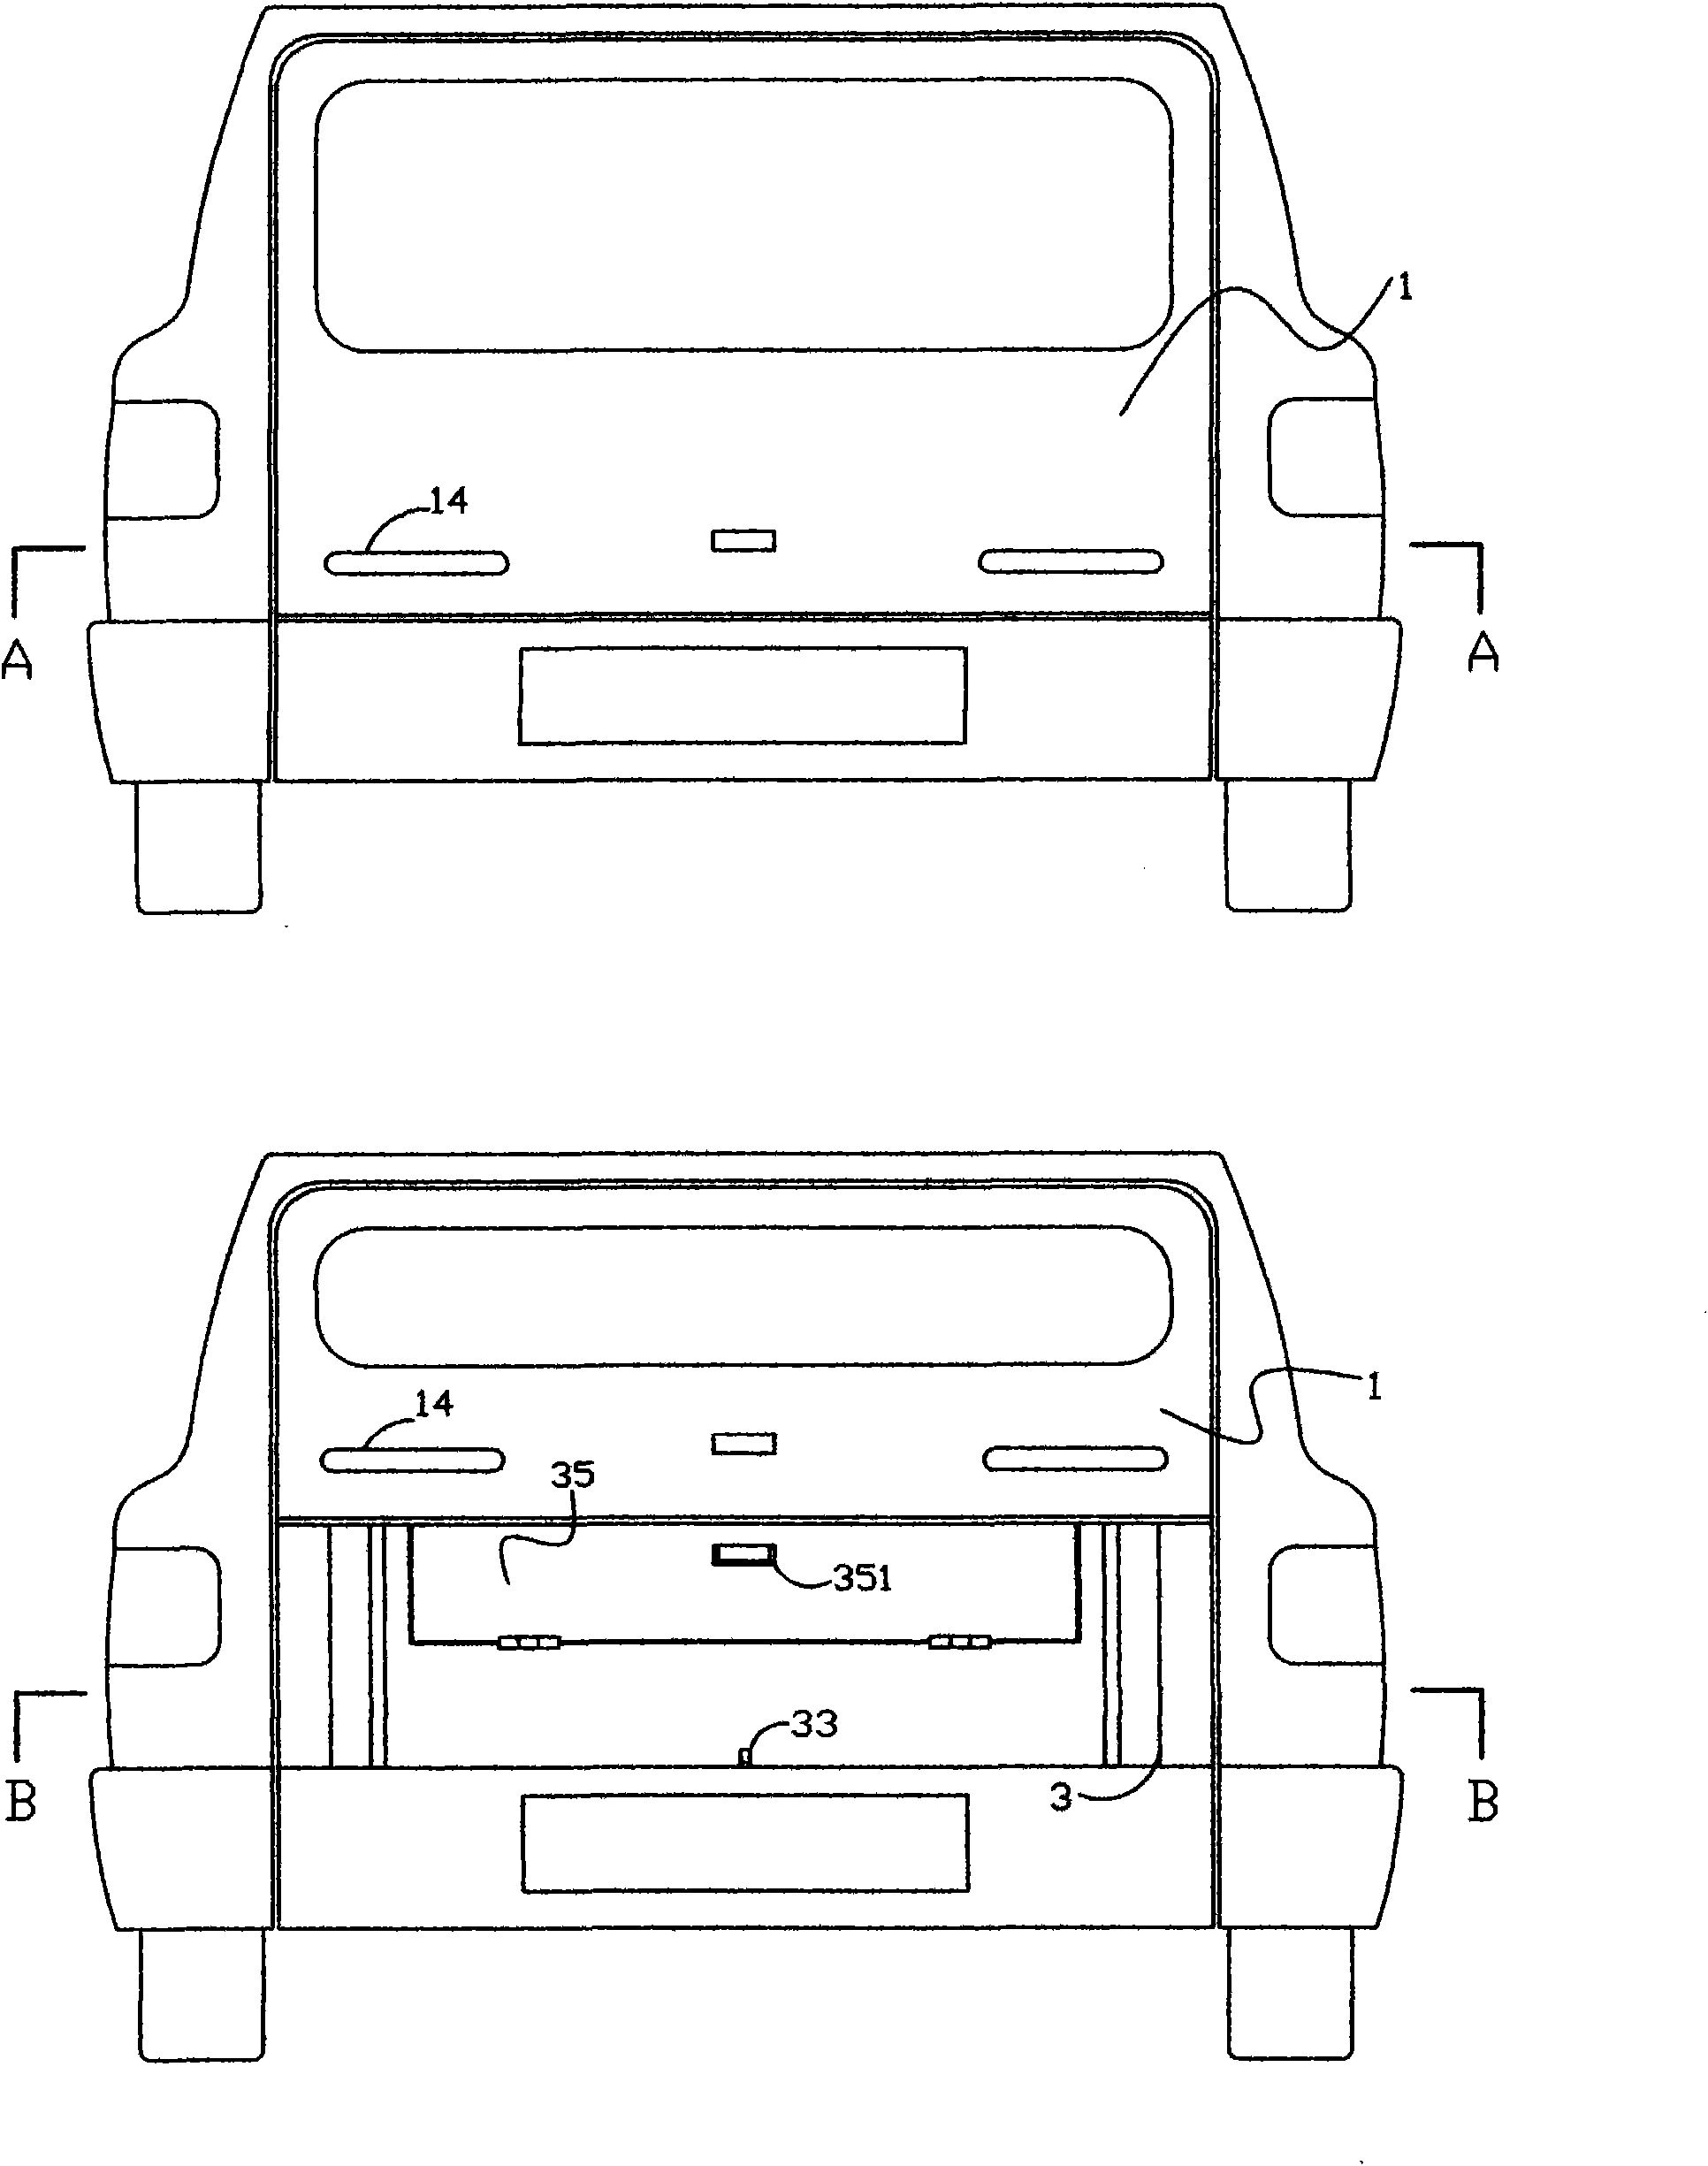 Telescopic rear trunk of passenger vehicle